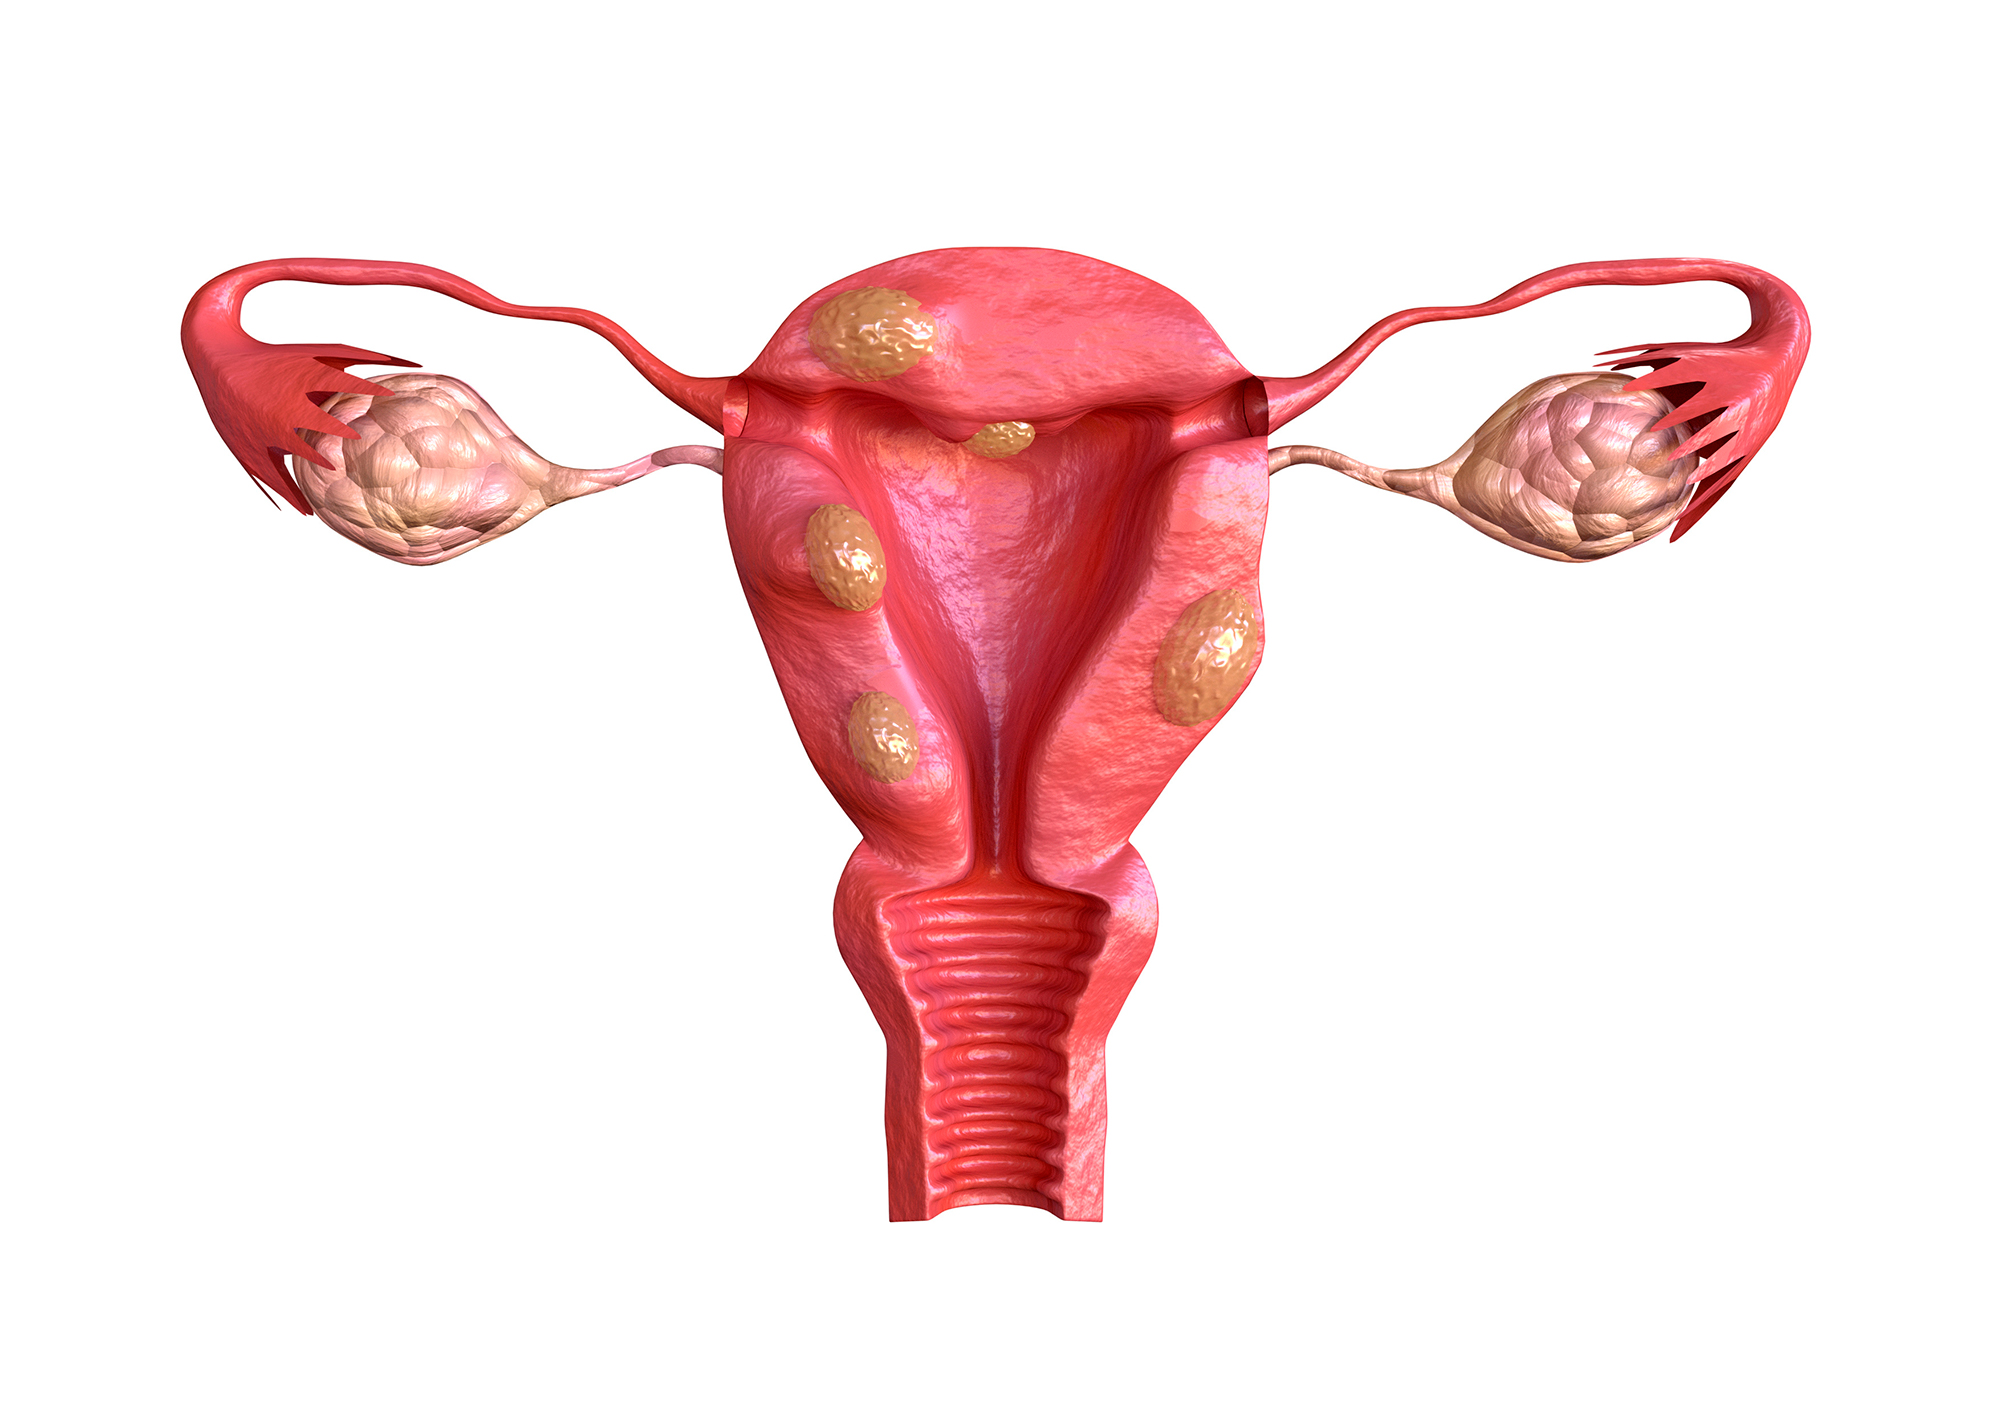 Fatores de risco para endometriose